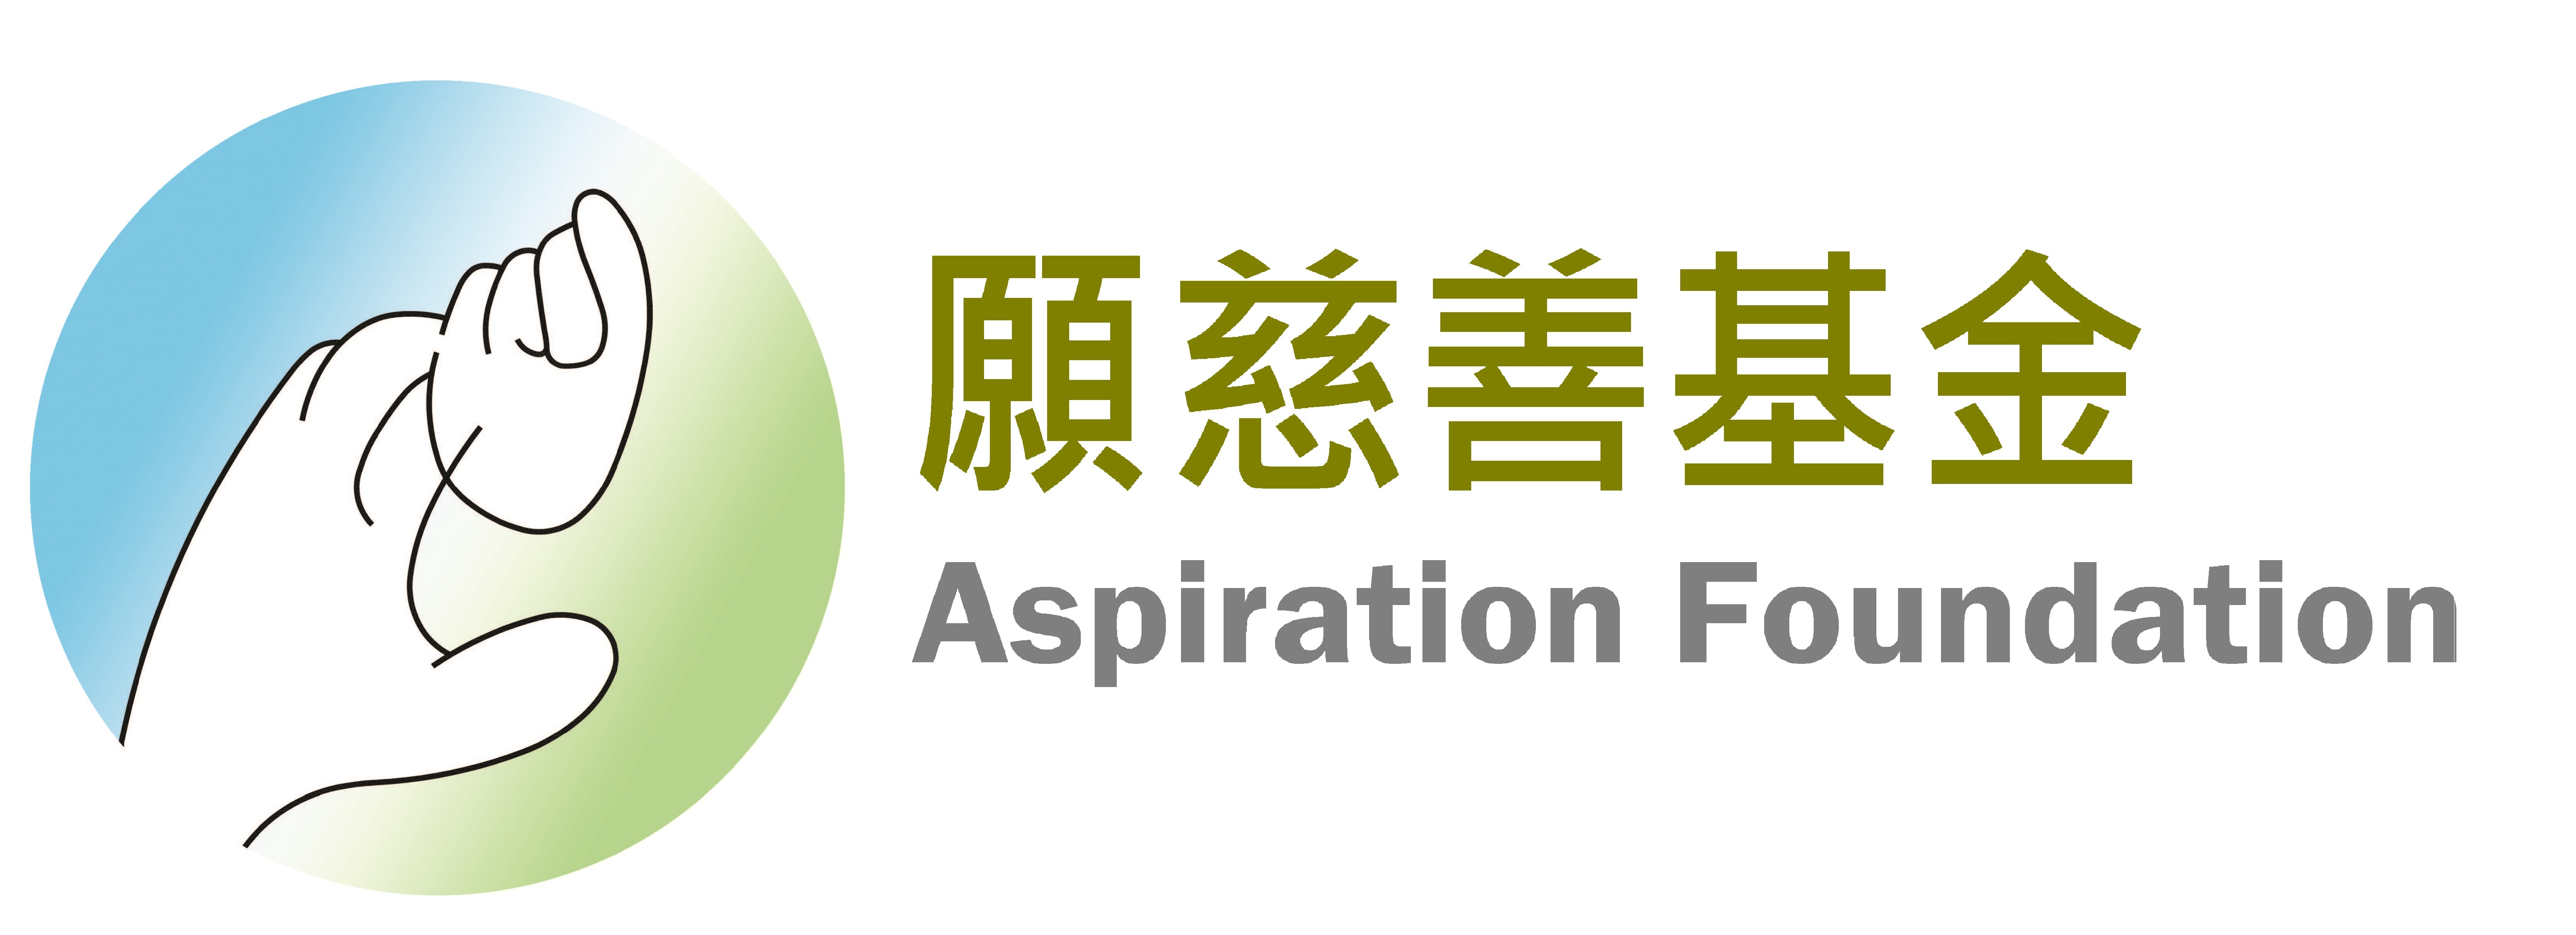 Aspiration1 Foundation